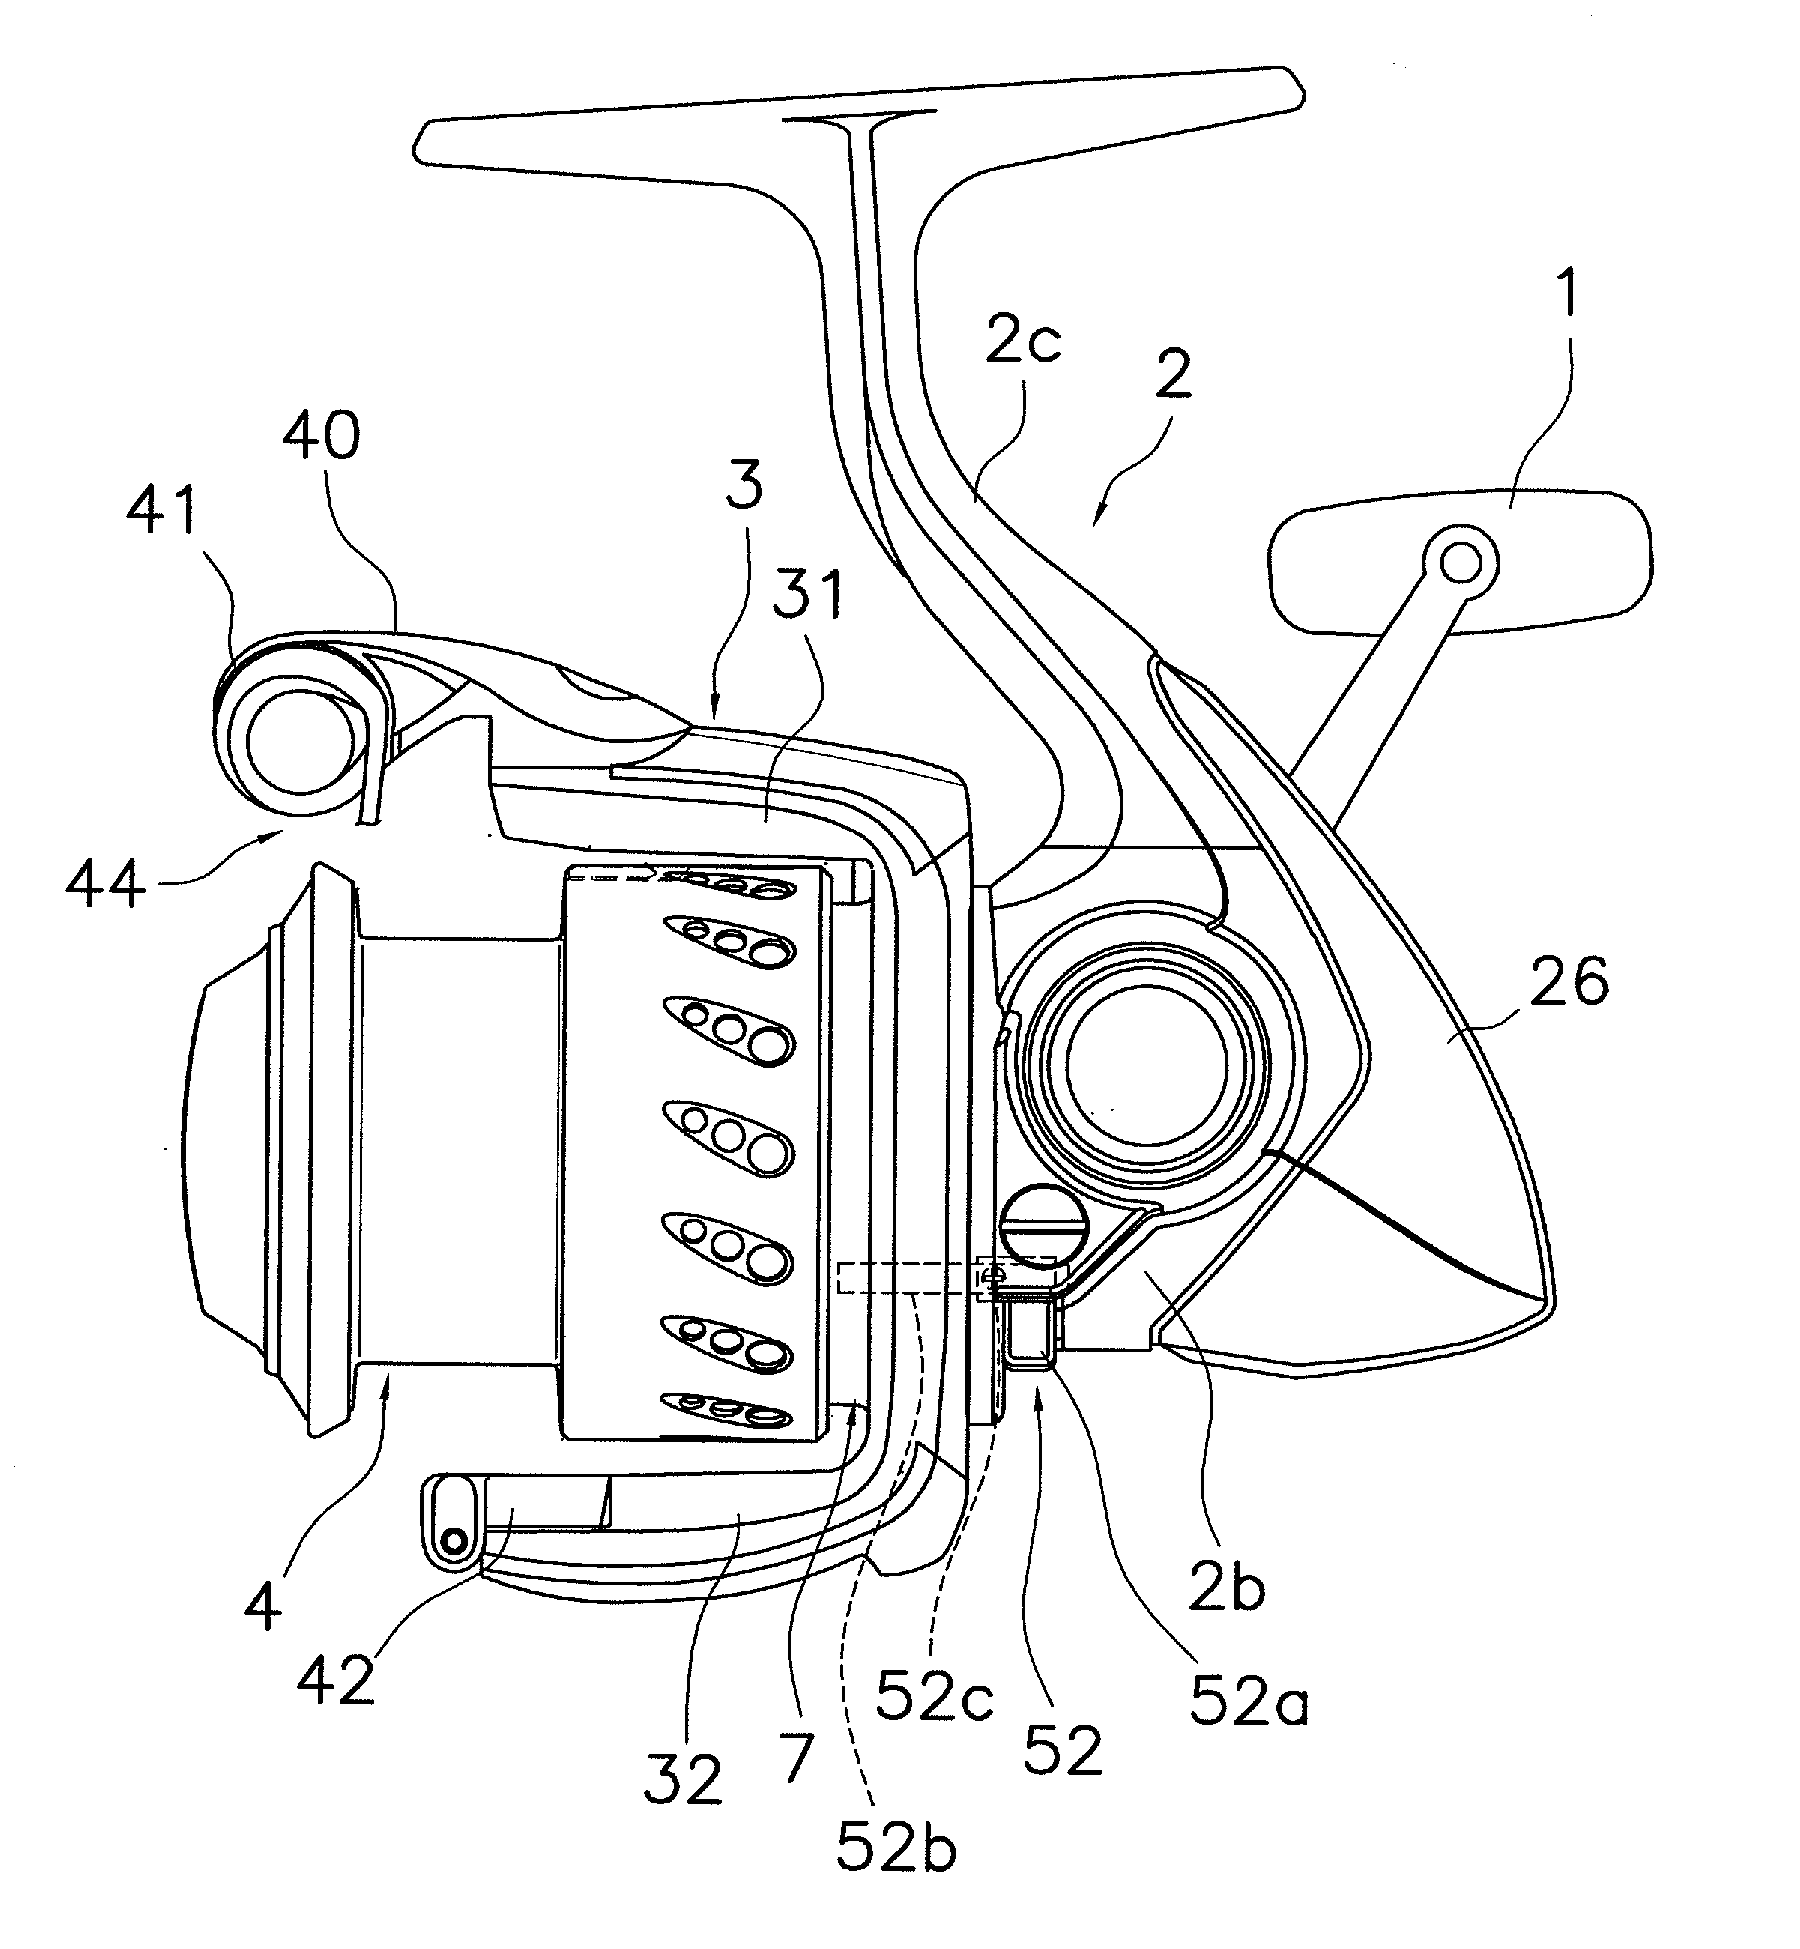 Reel unit of spinning reel